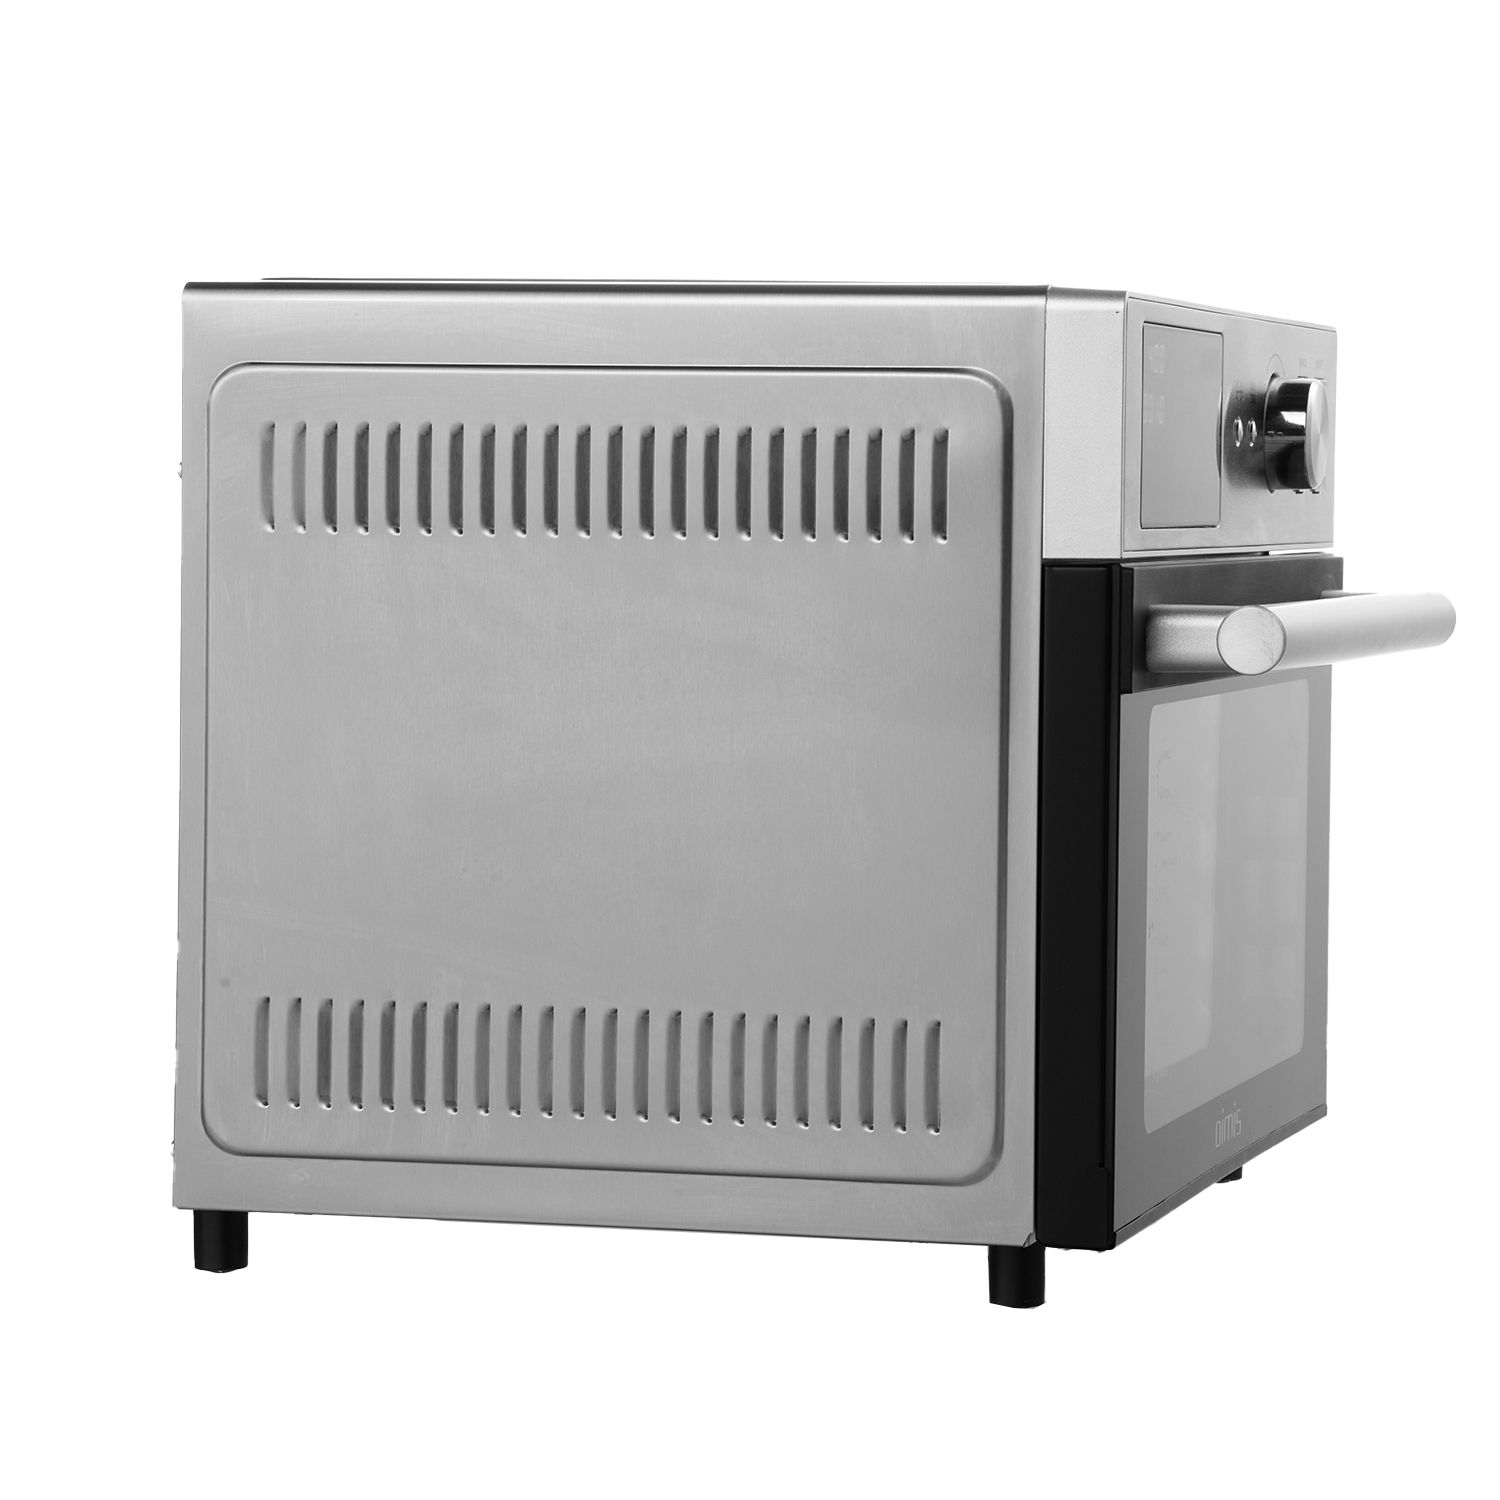 Air Fryer Oven OIMIS,32QT X-Large Air Fryer Toaster Algeria